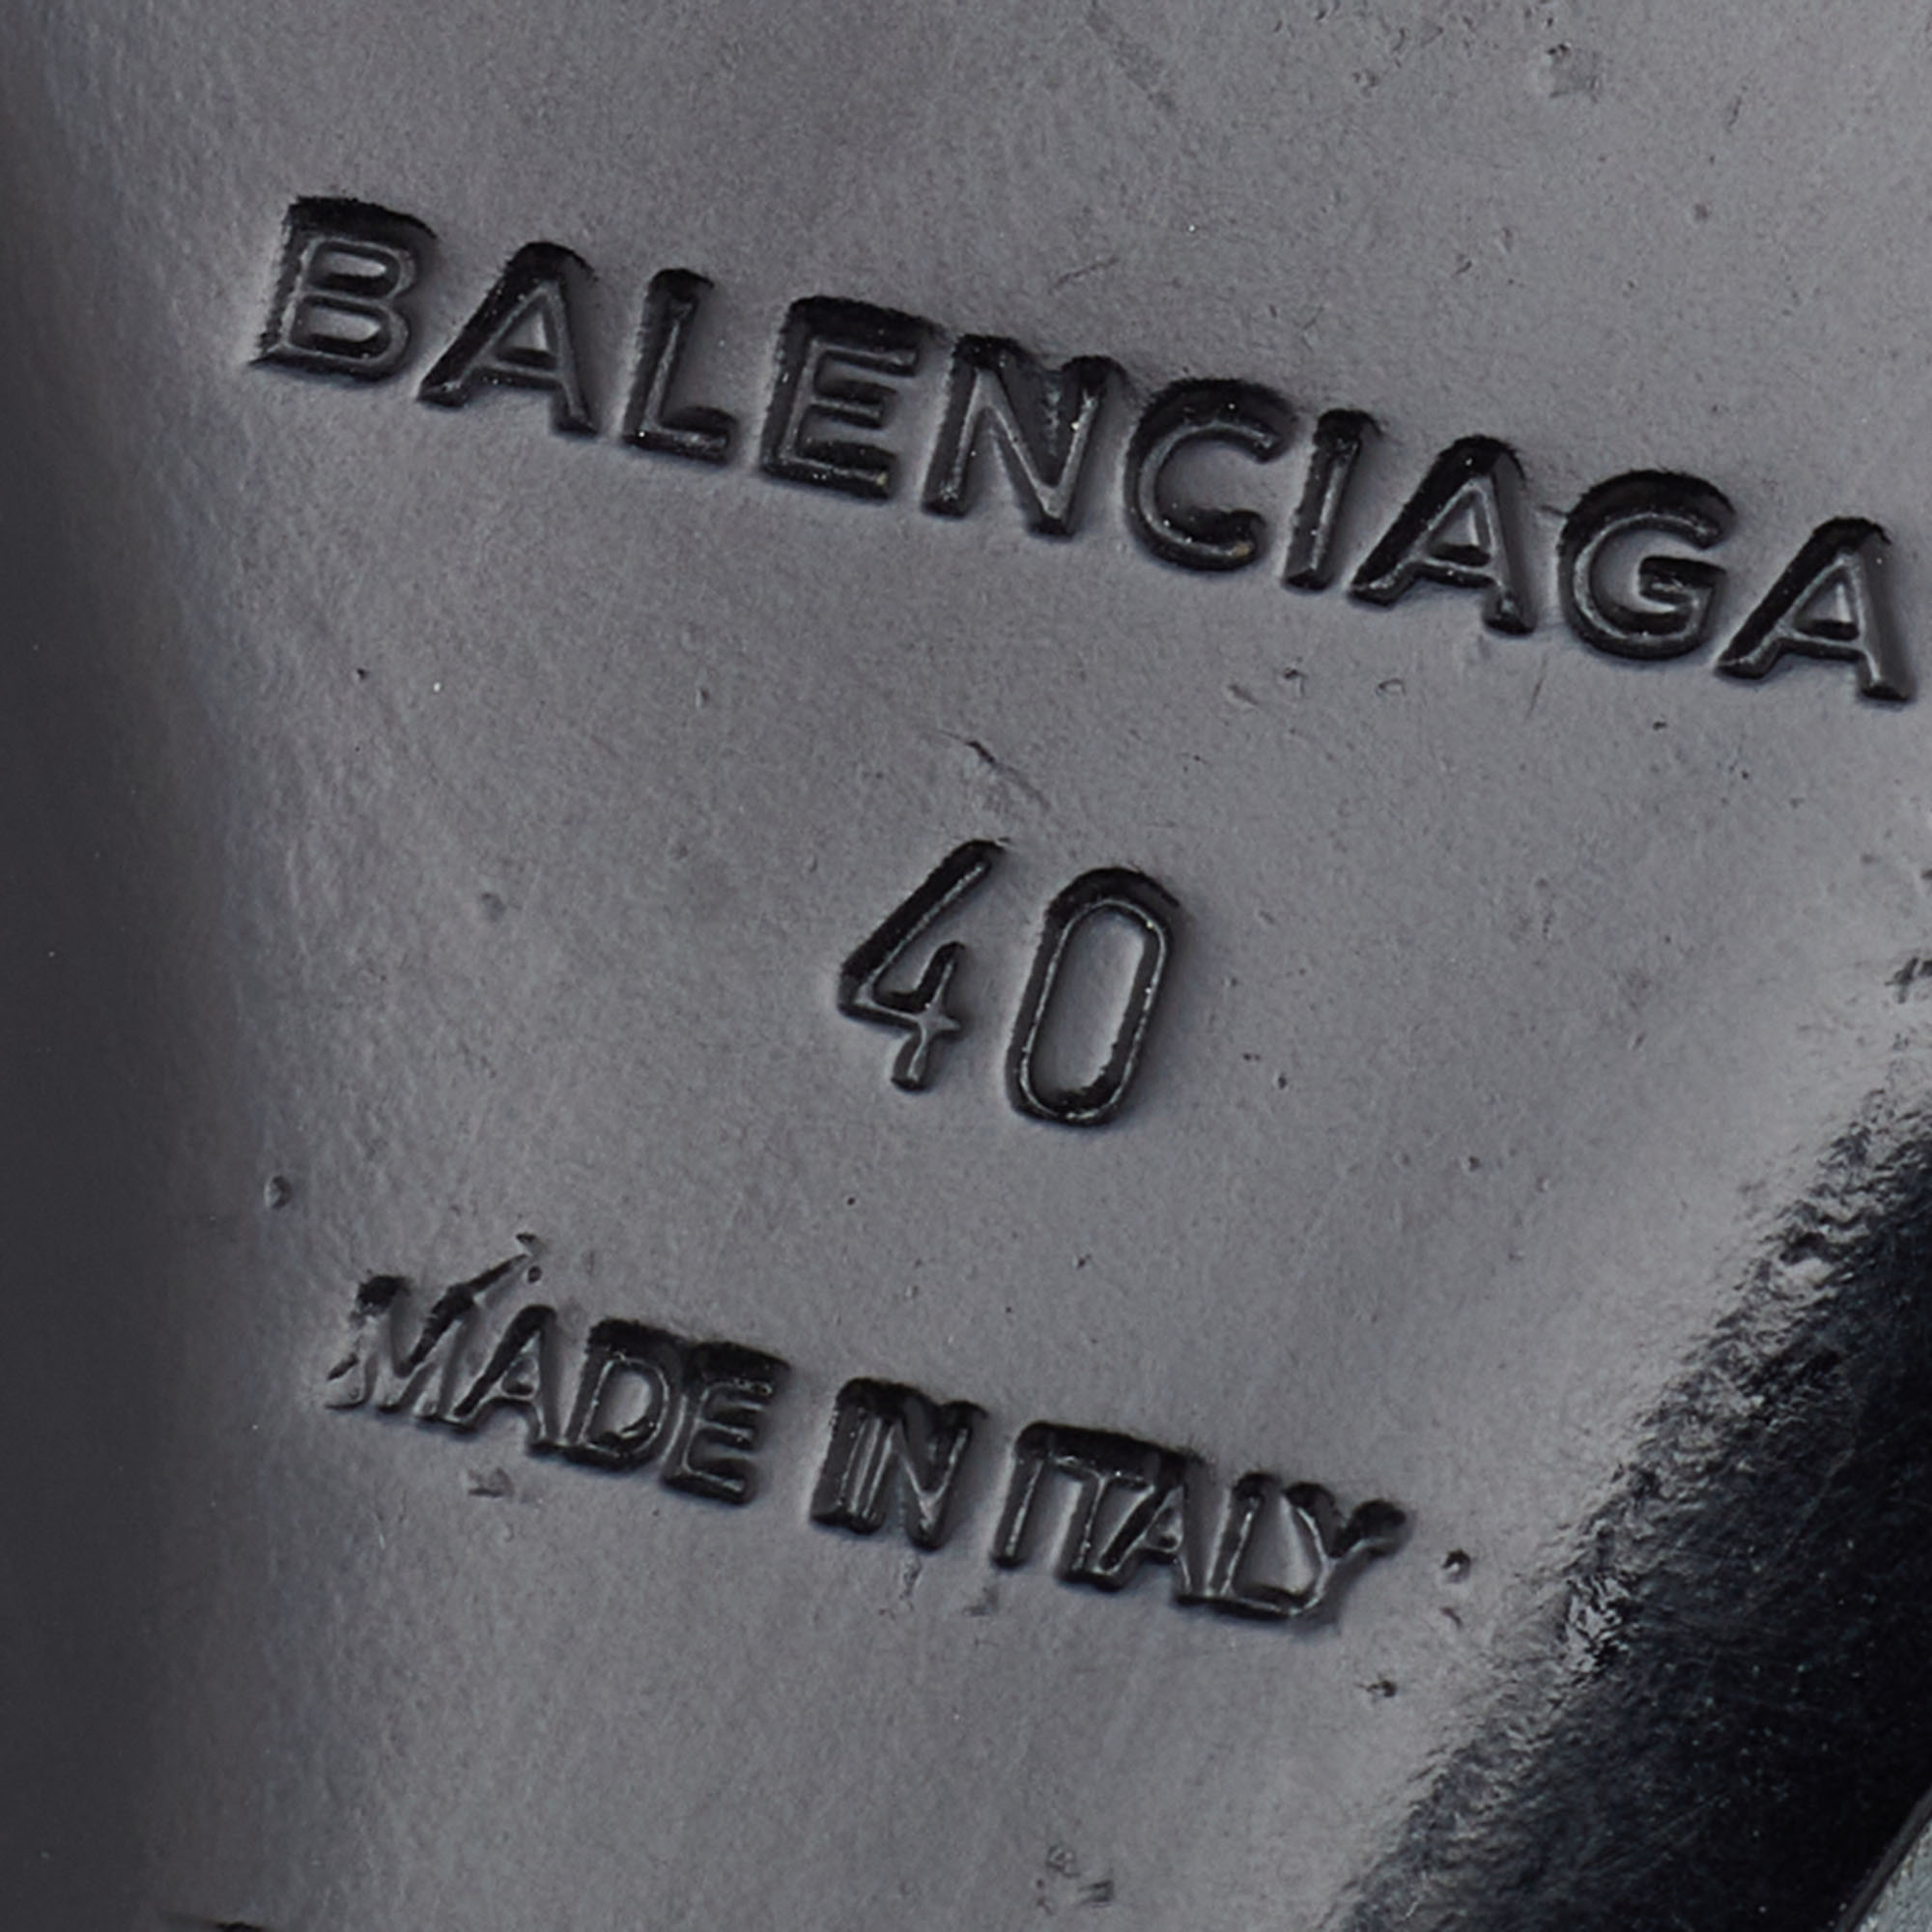 Balenciaga Grey Leather Glove Wedges Slingback Sandals Size 40